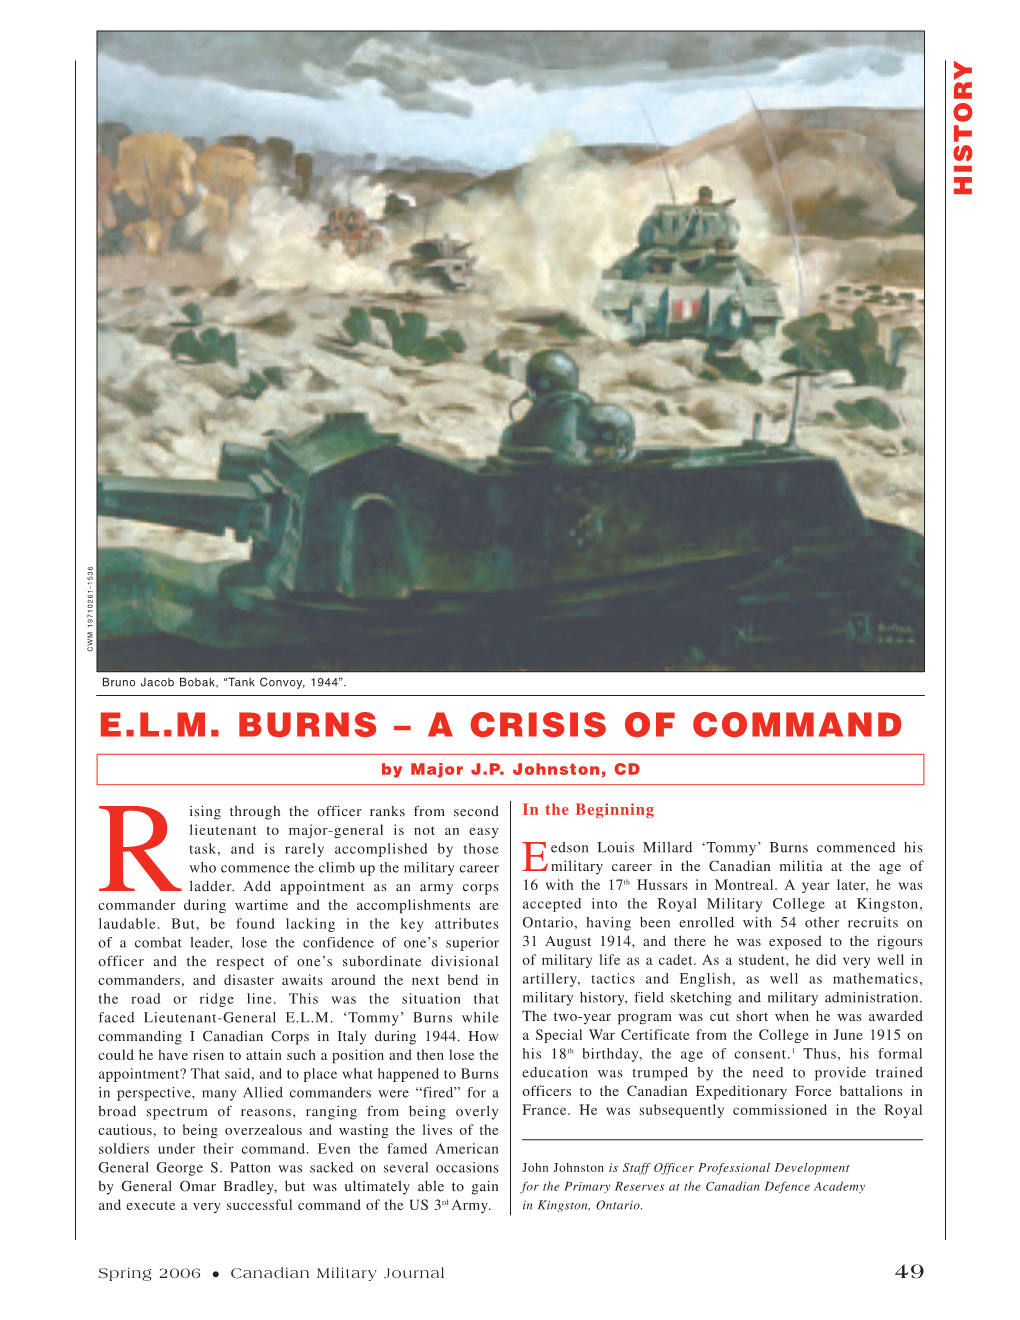 E.L.M. Burns – a Crisis of Command